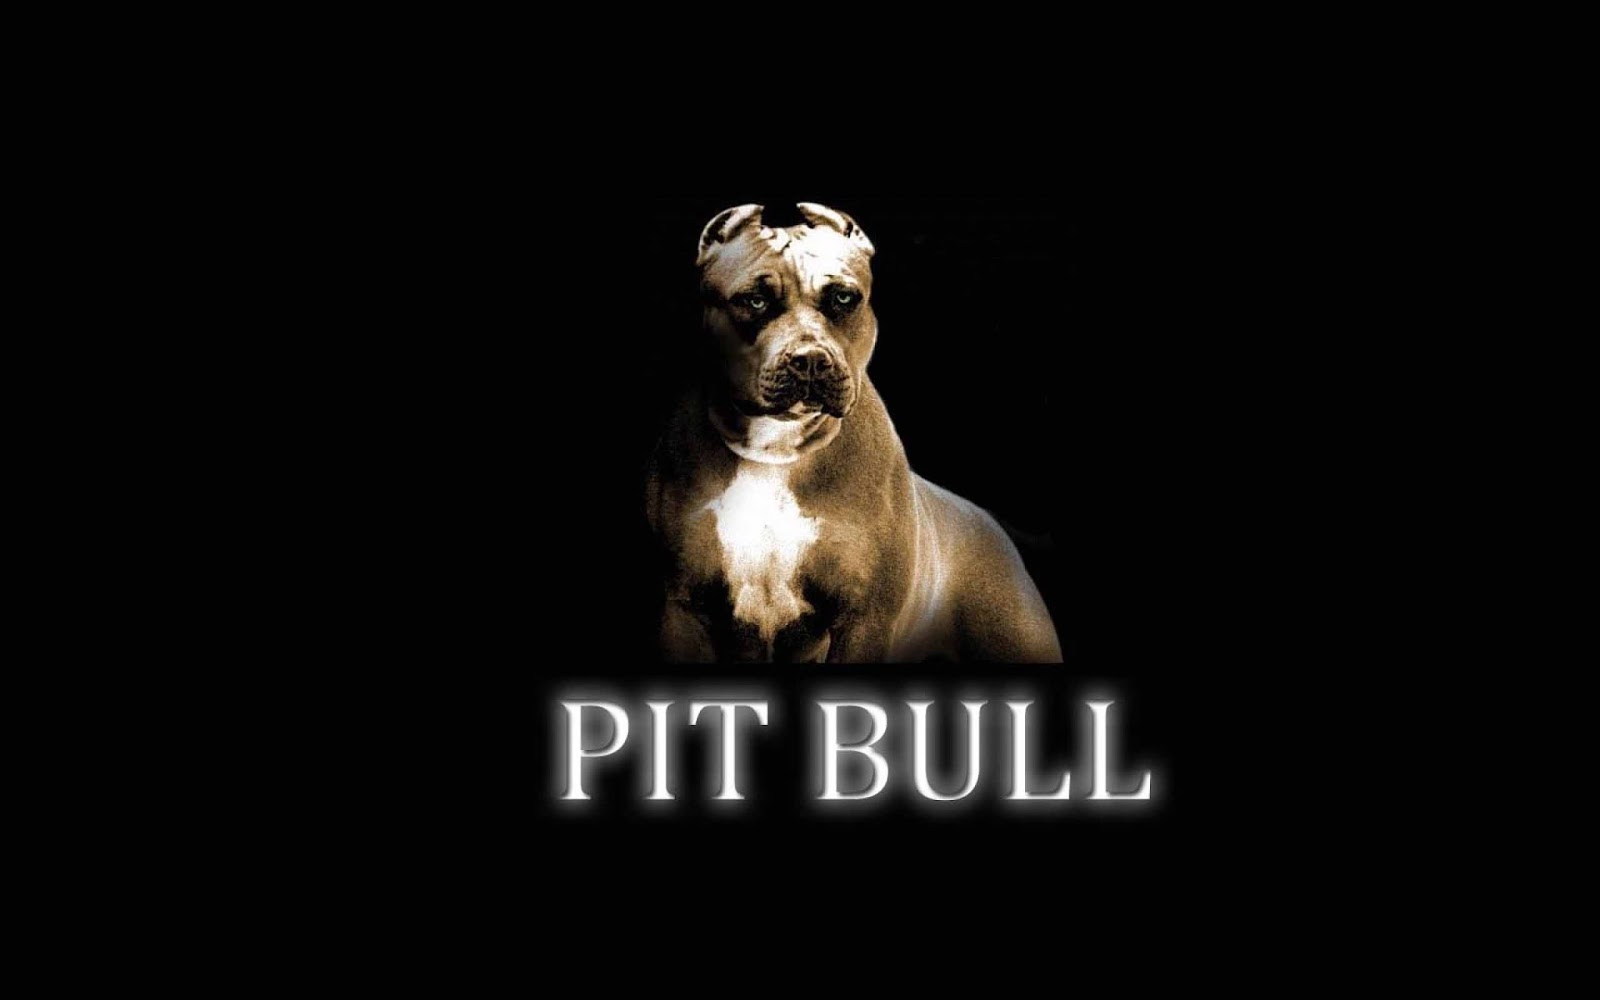 HD Wallpaper Pitbull Dog For